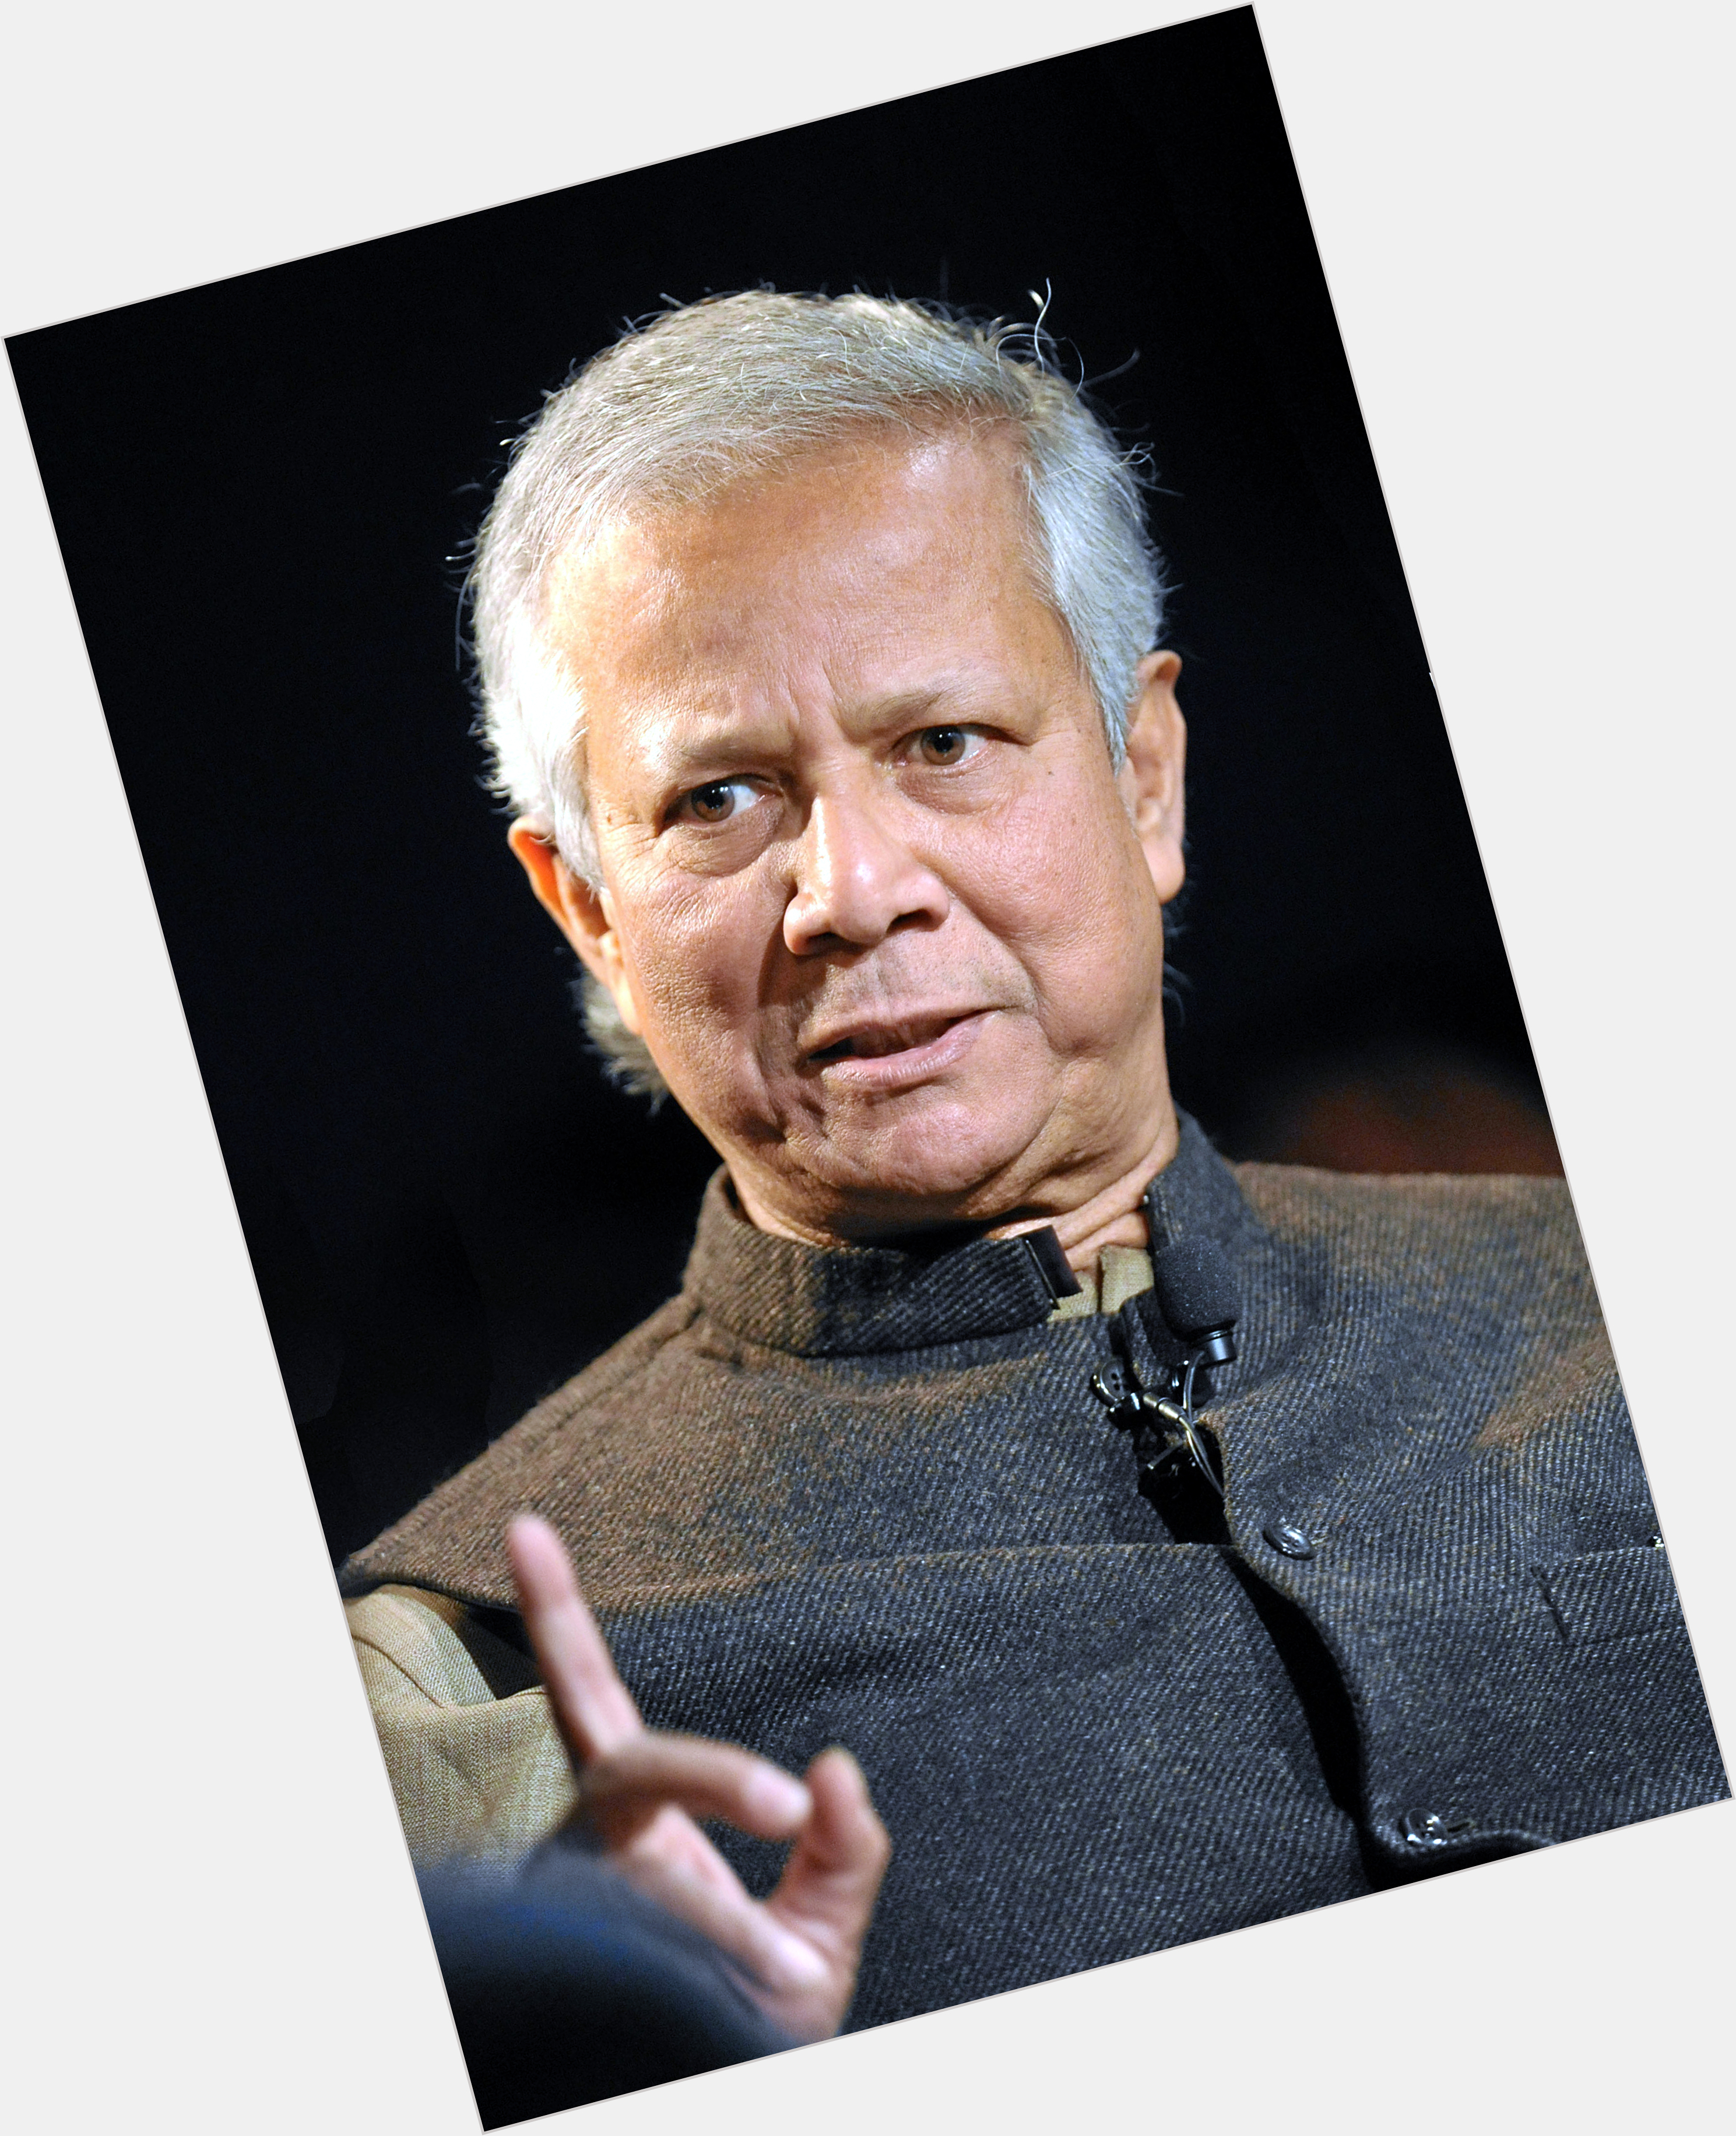 Http://fanpagepress.net/m/M/Muhammad Yunus Dating 4